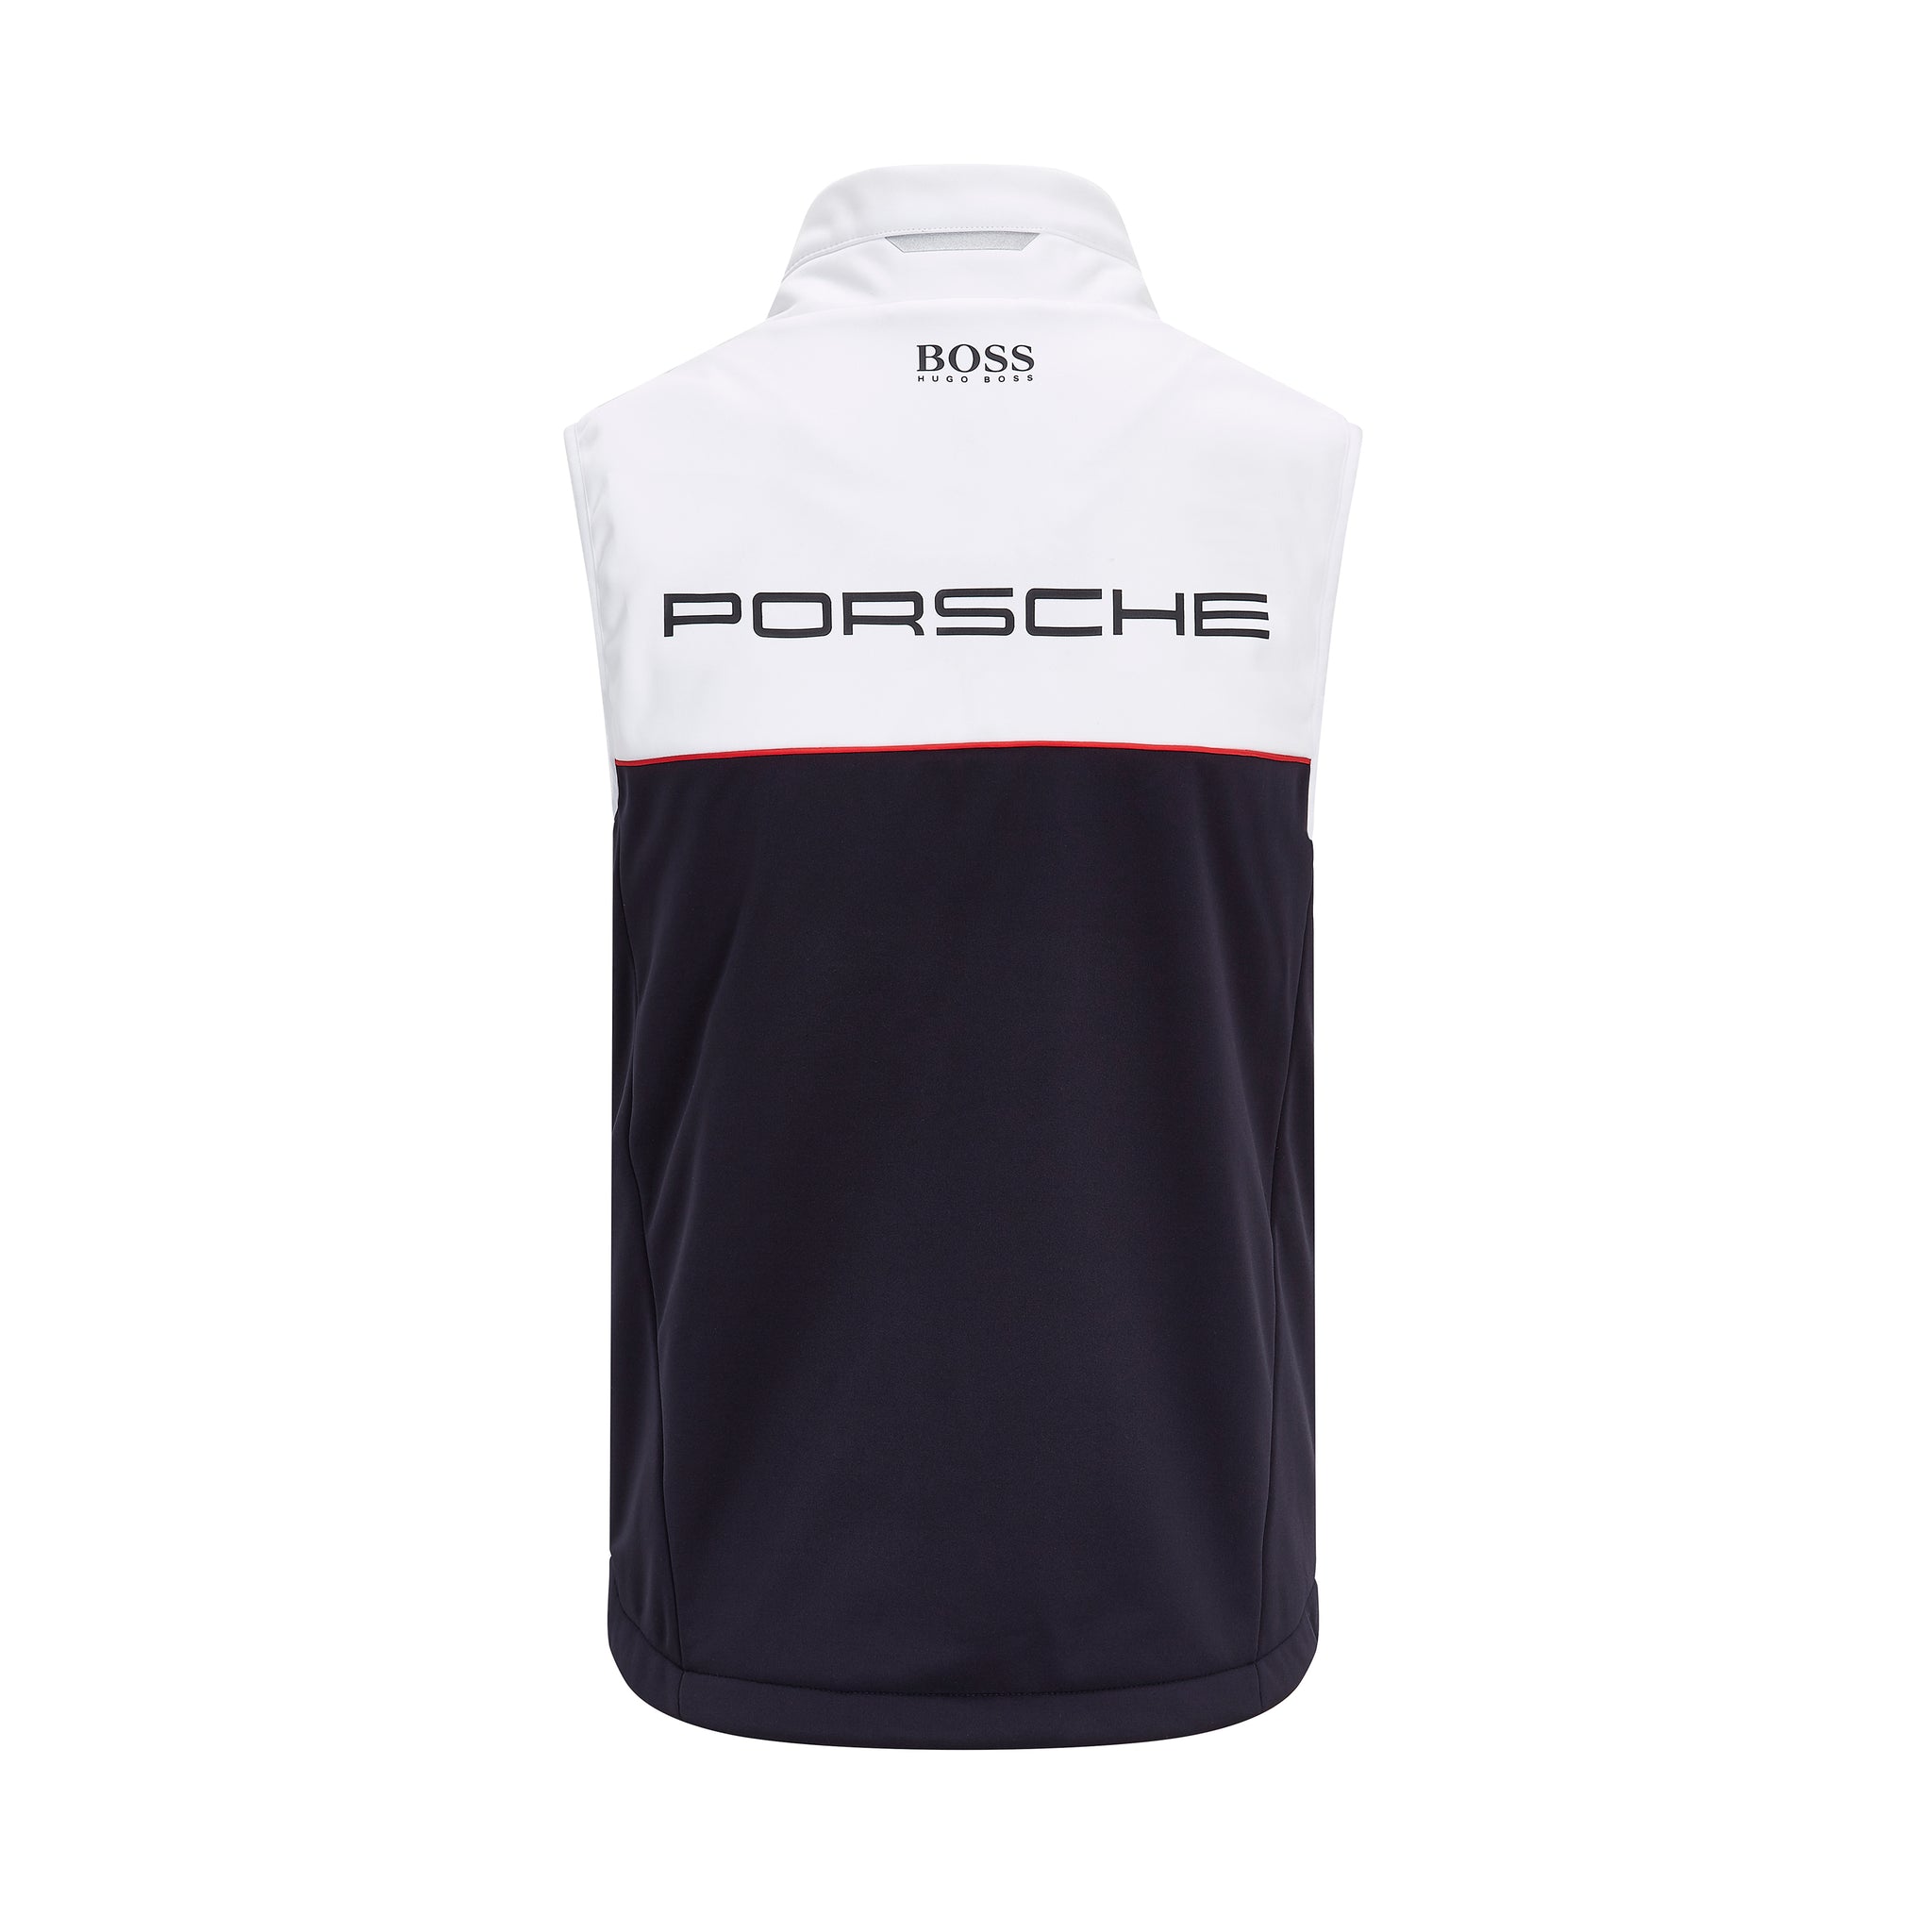 Porsche Team Gilet - Black & White - 2019/20 – Pit-Lane Motorsport